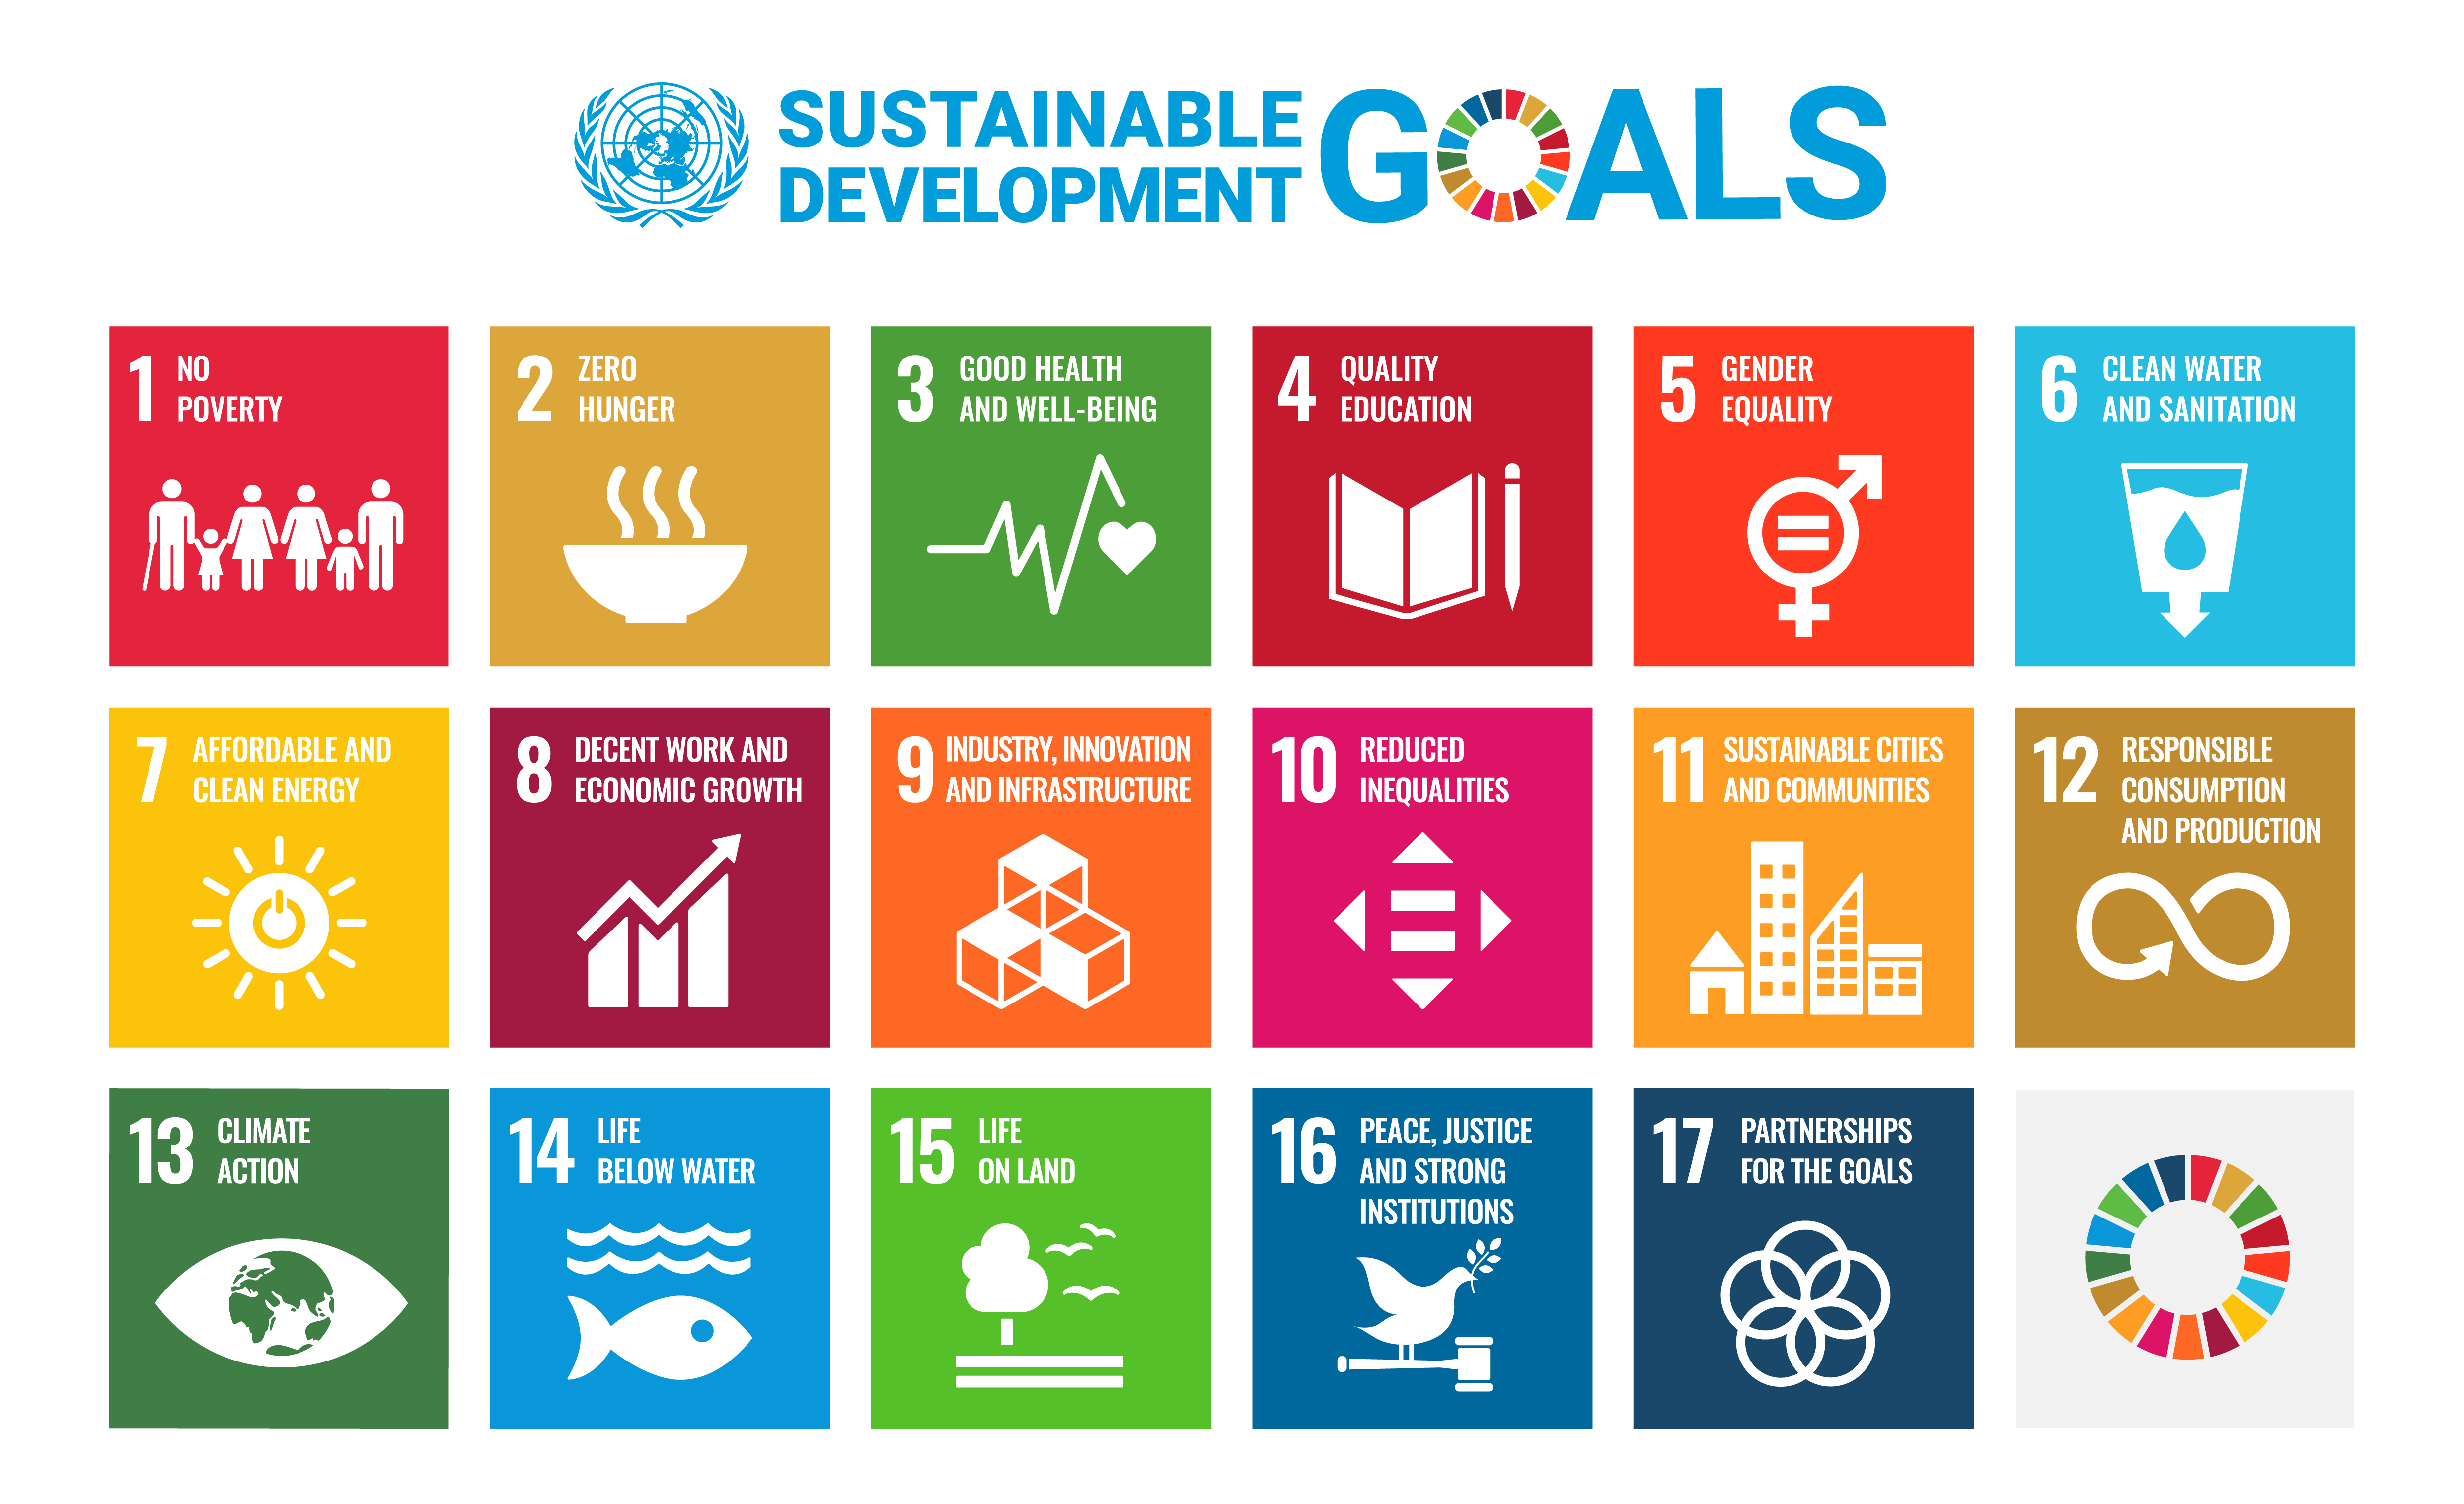 SDG Logo and Goals